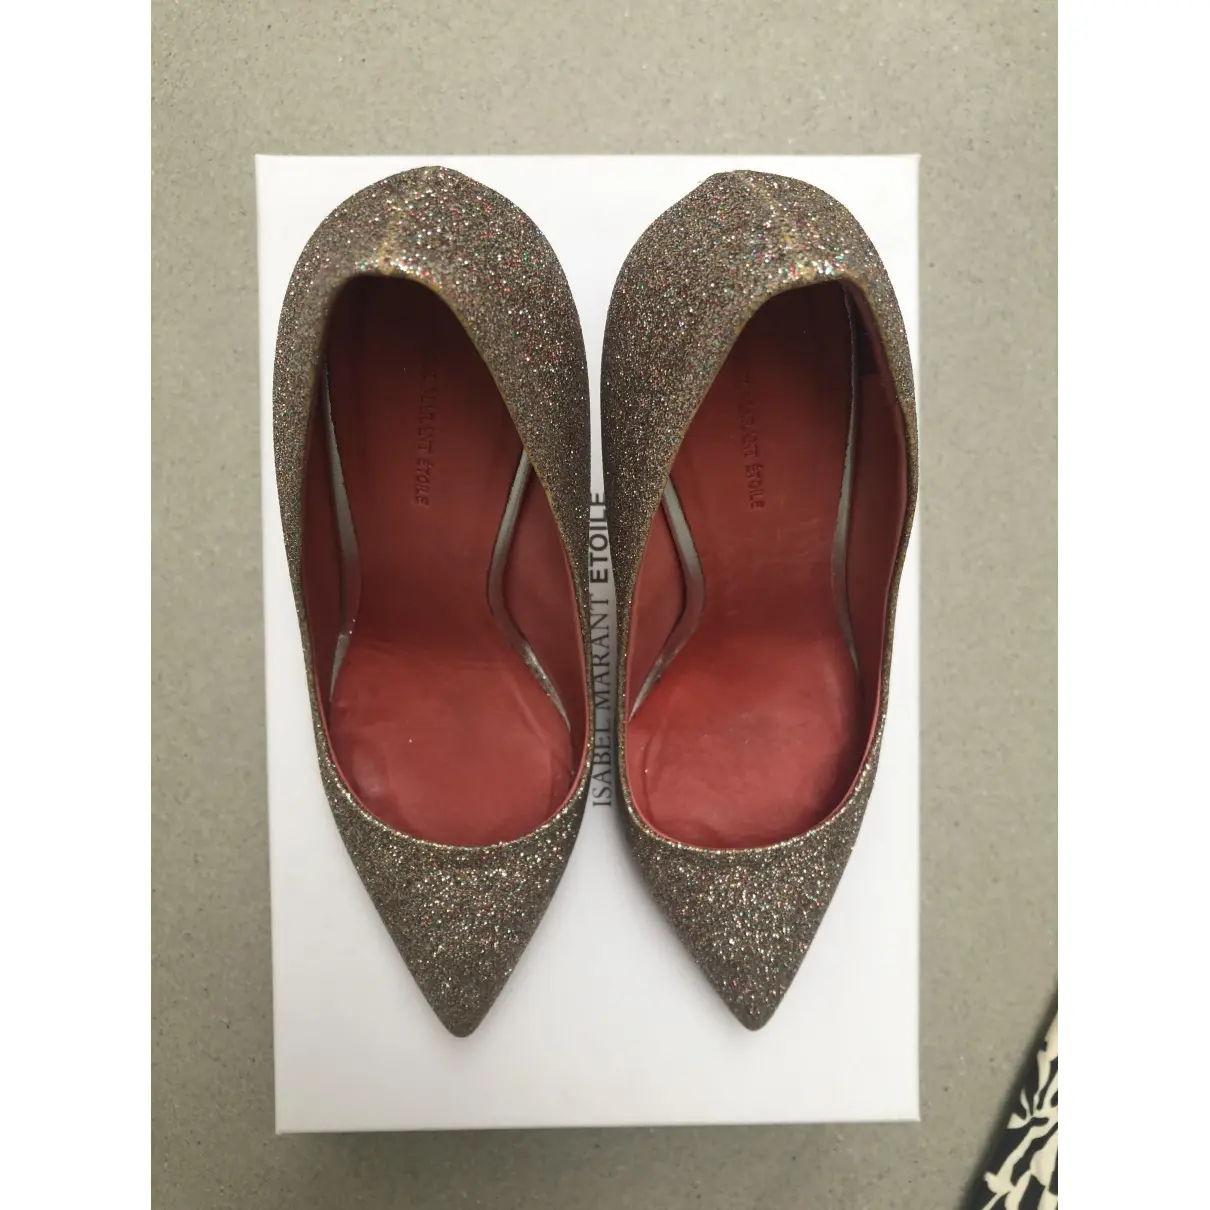 Buy Isabel Marant Glitter heels online